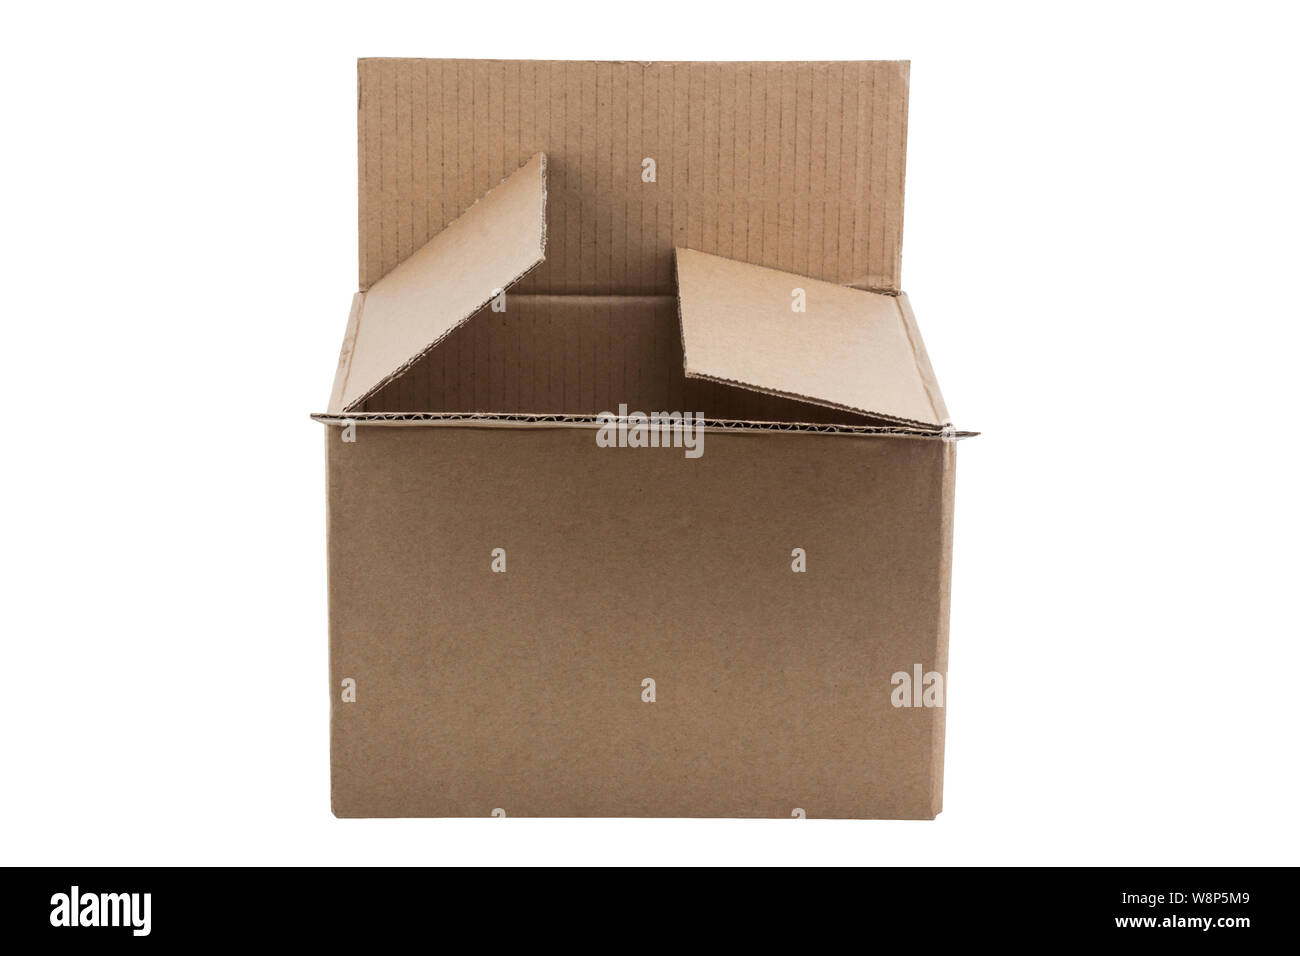 Cardboard box isolated on white background Stock Photo